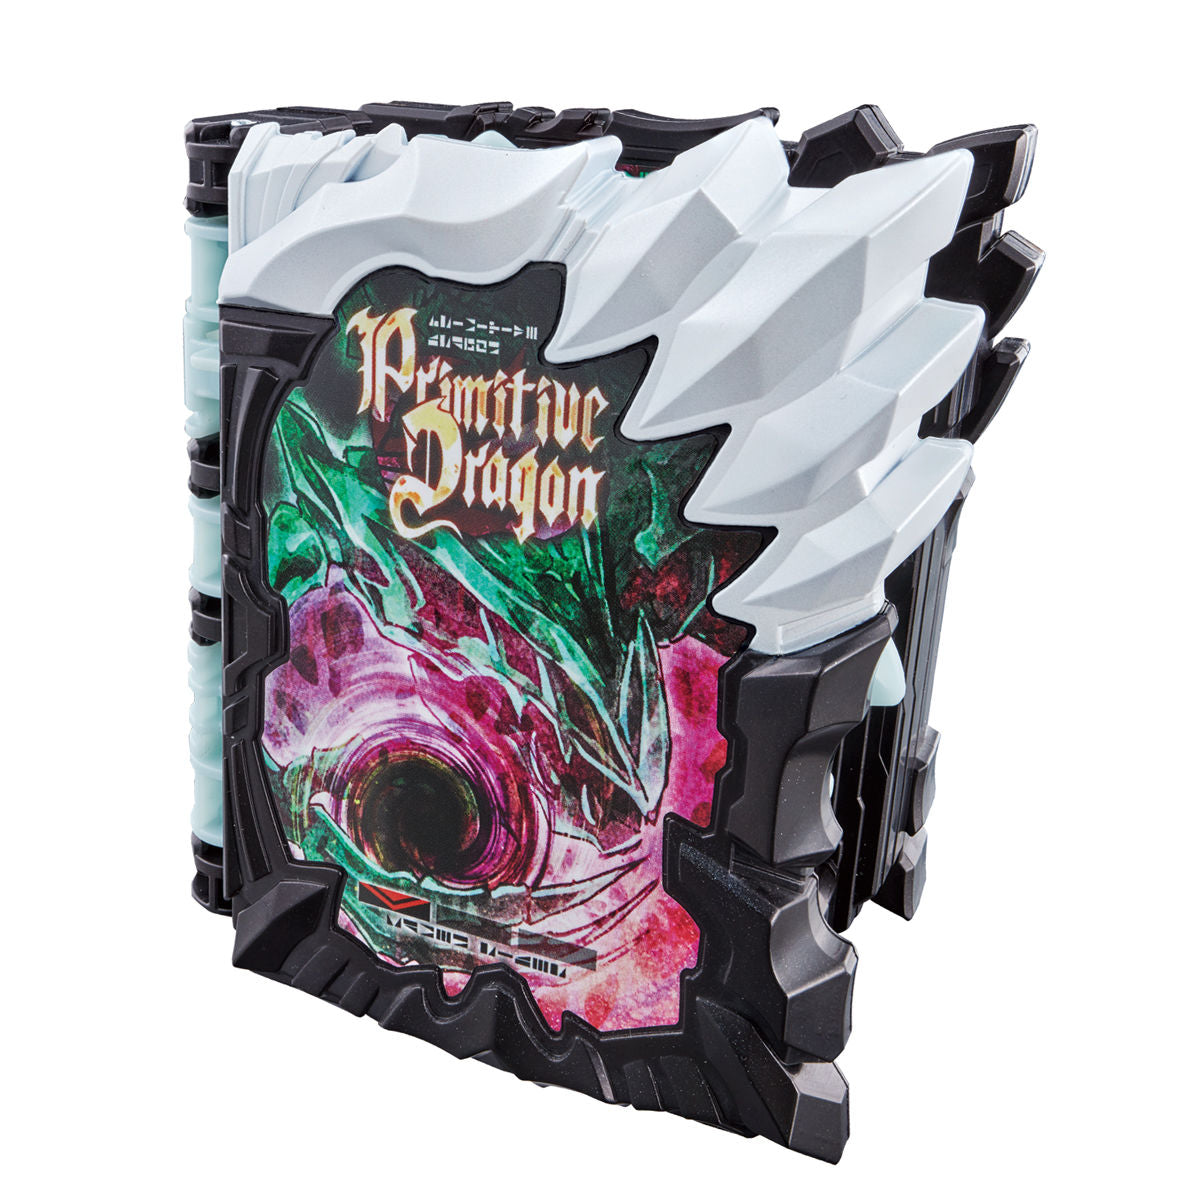 DX Primitive Dragon Wonder Ride Book